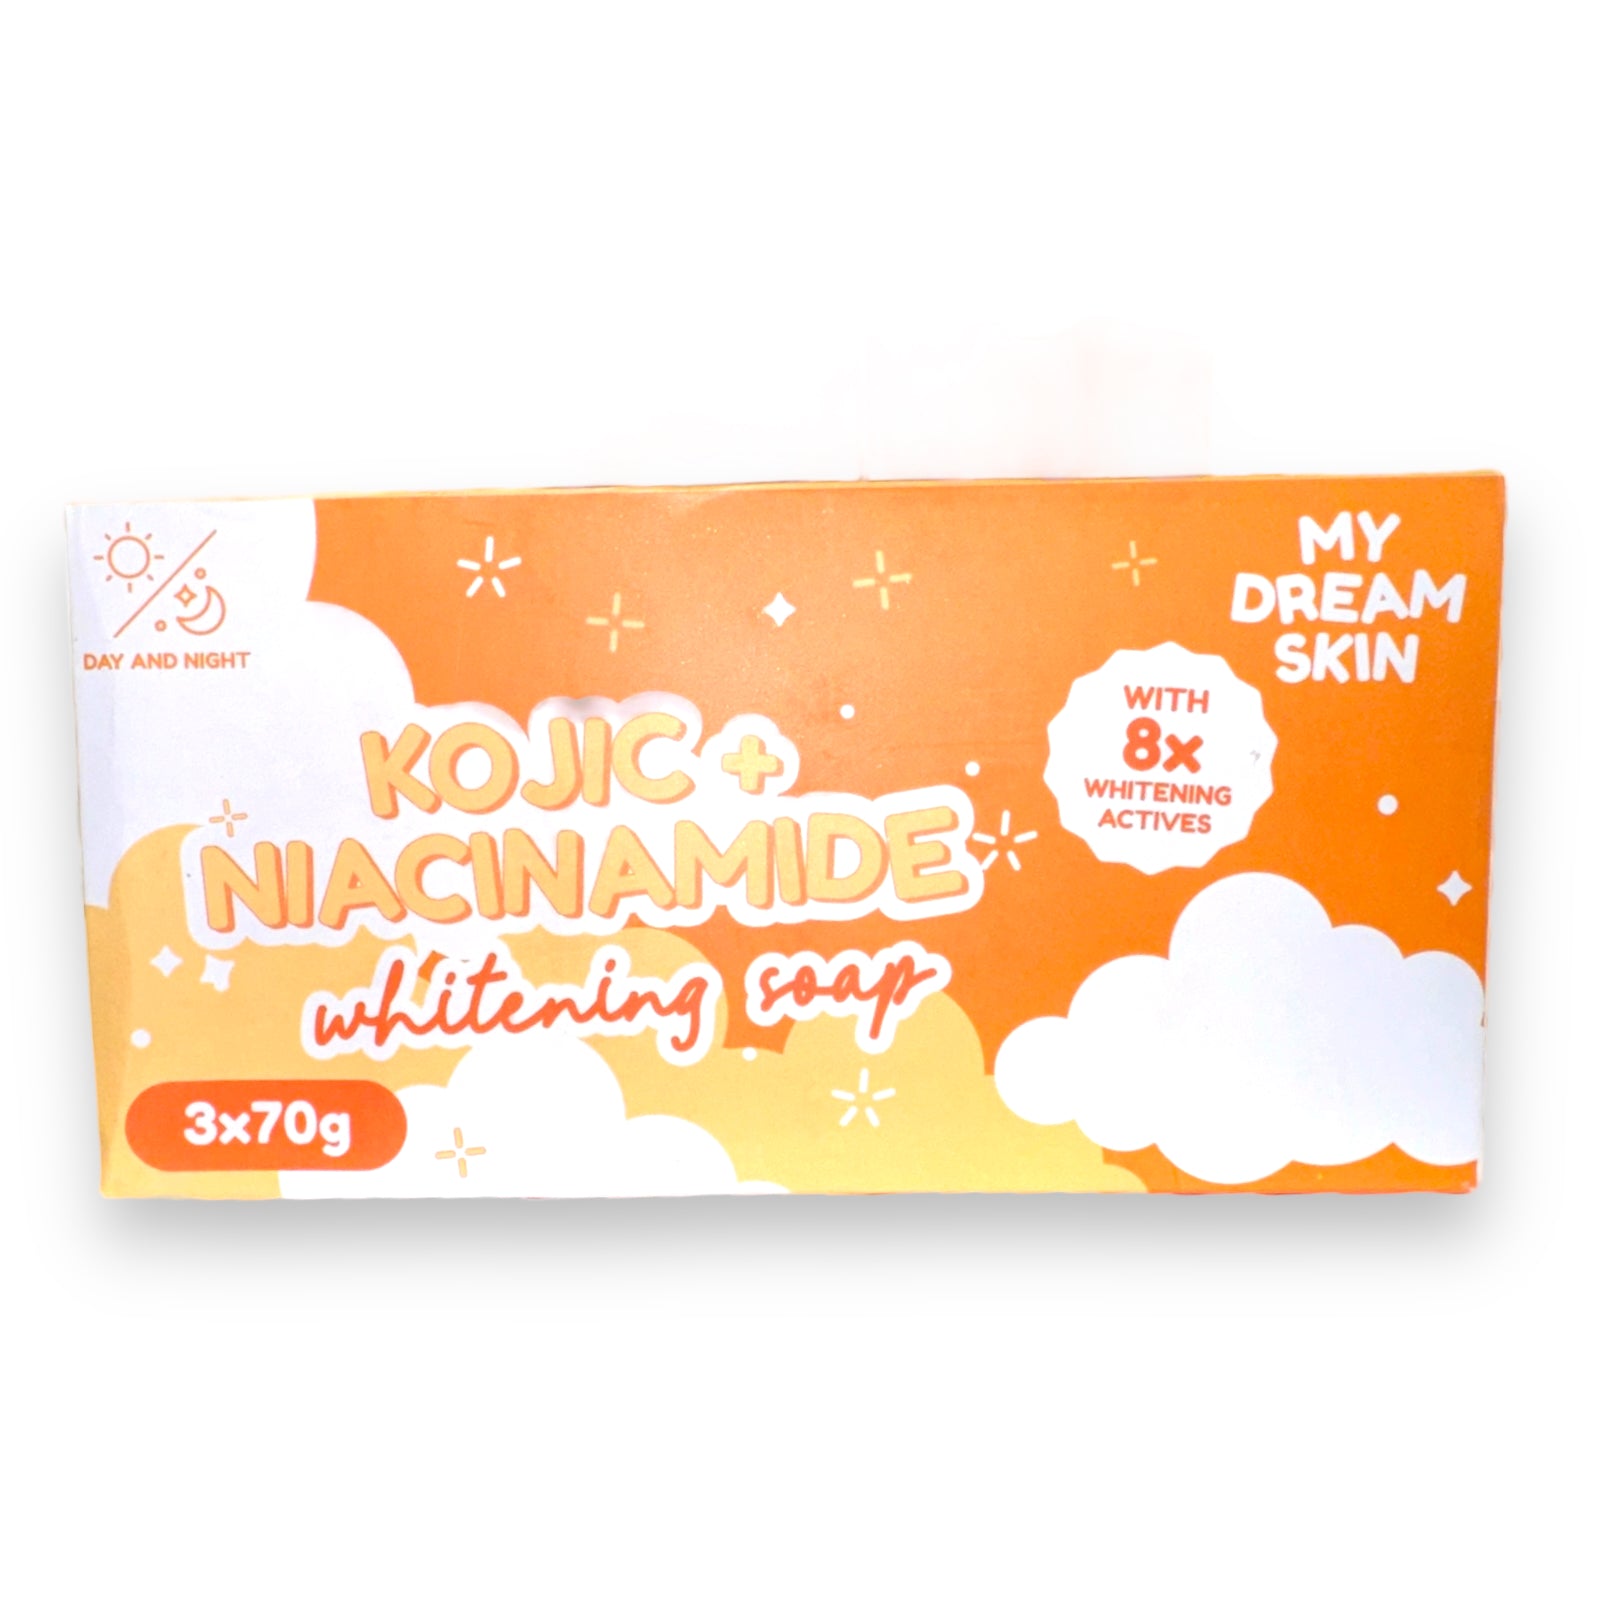 My Dream Skin - Kojic + Niacinamide Whitening Soap 3 x 70g